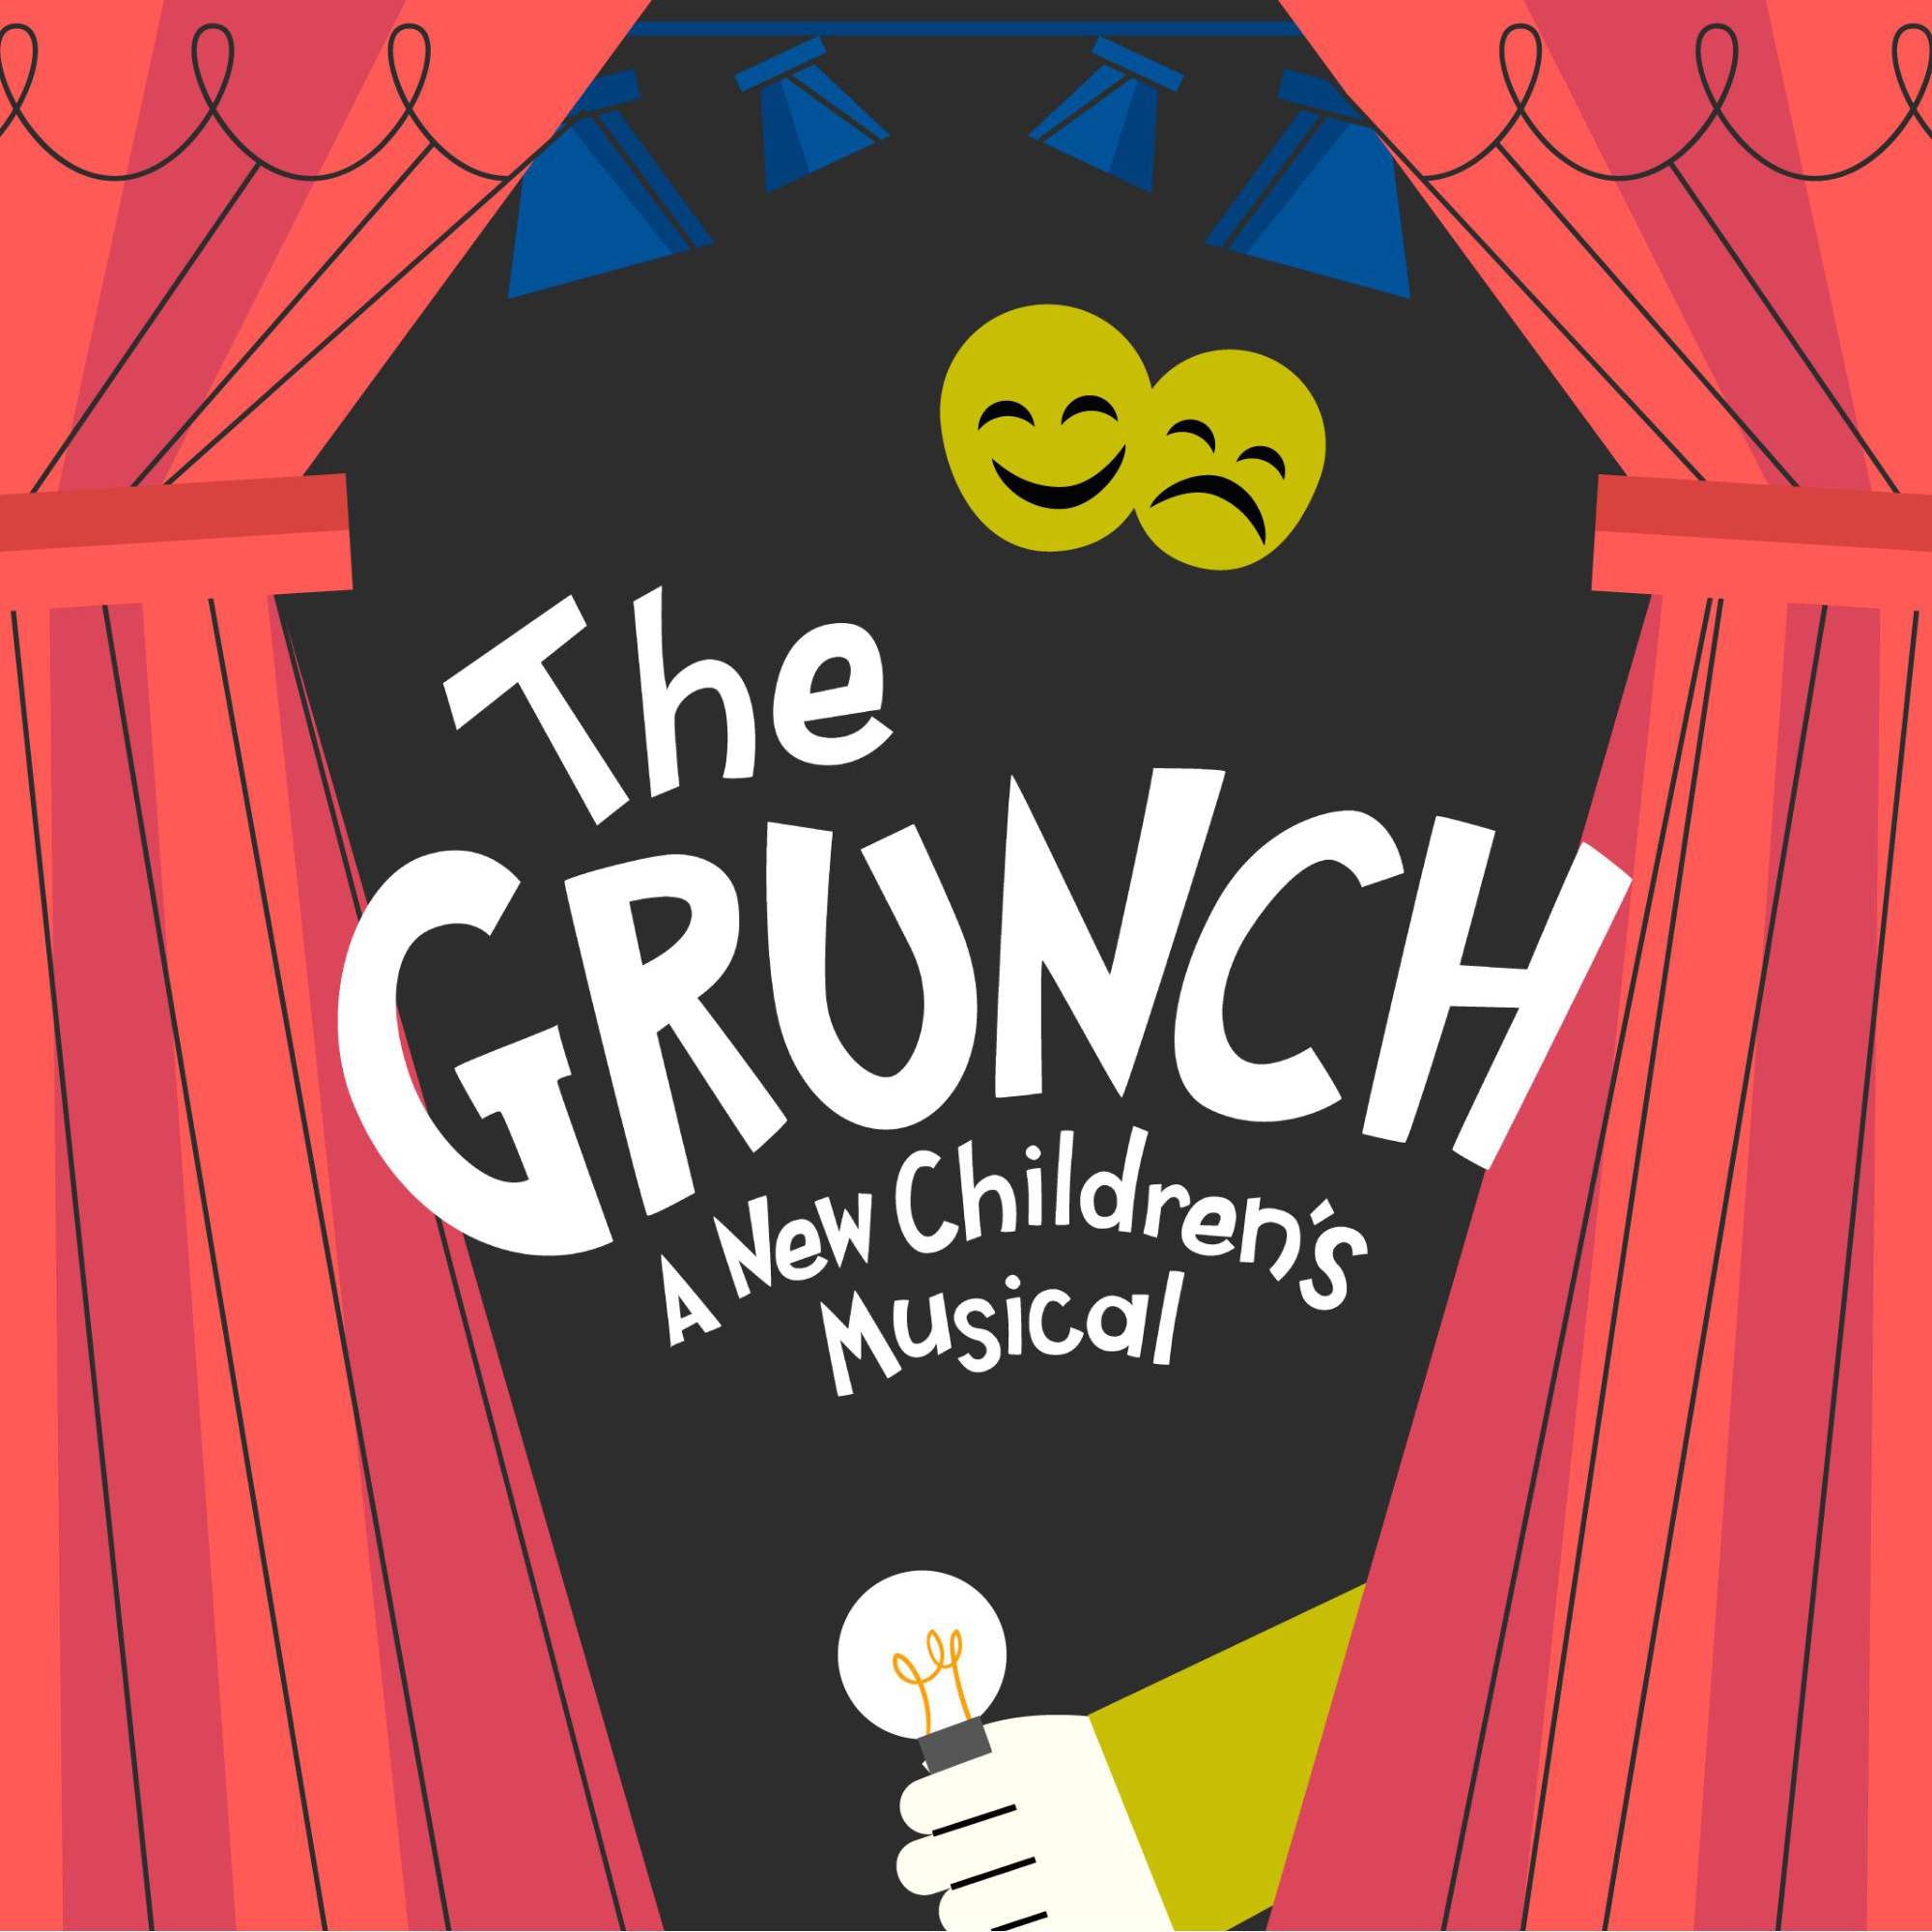 The Grunch Musical Theatre Program